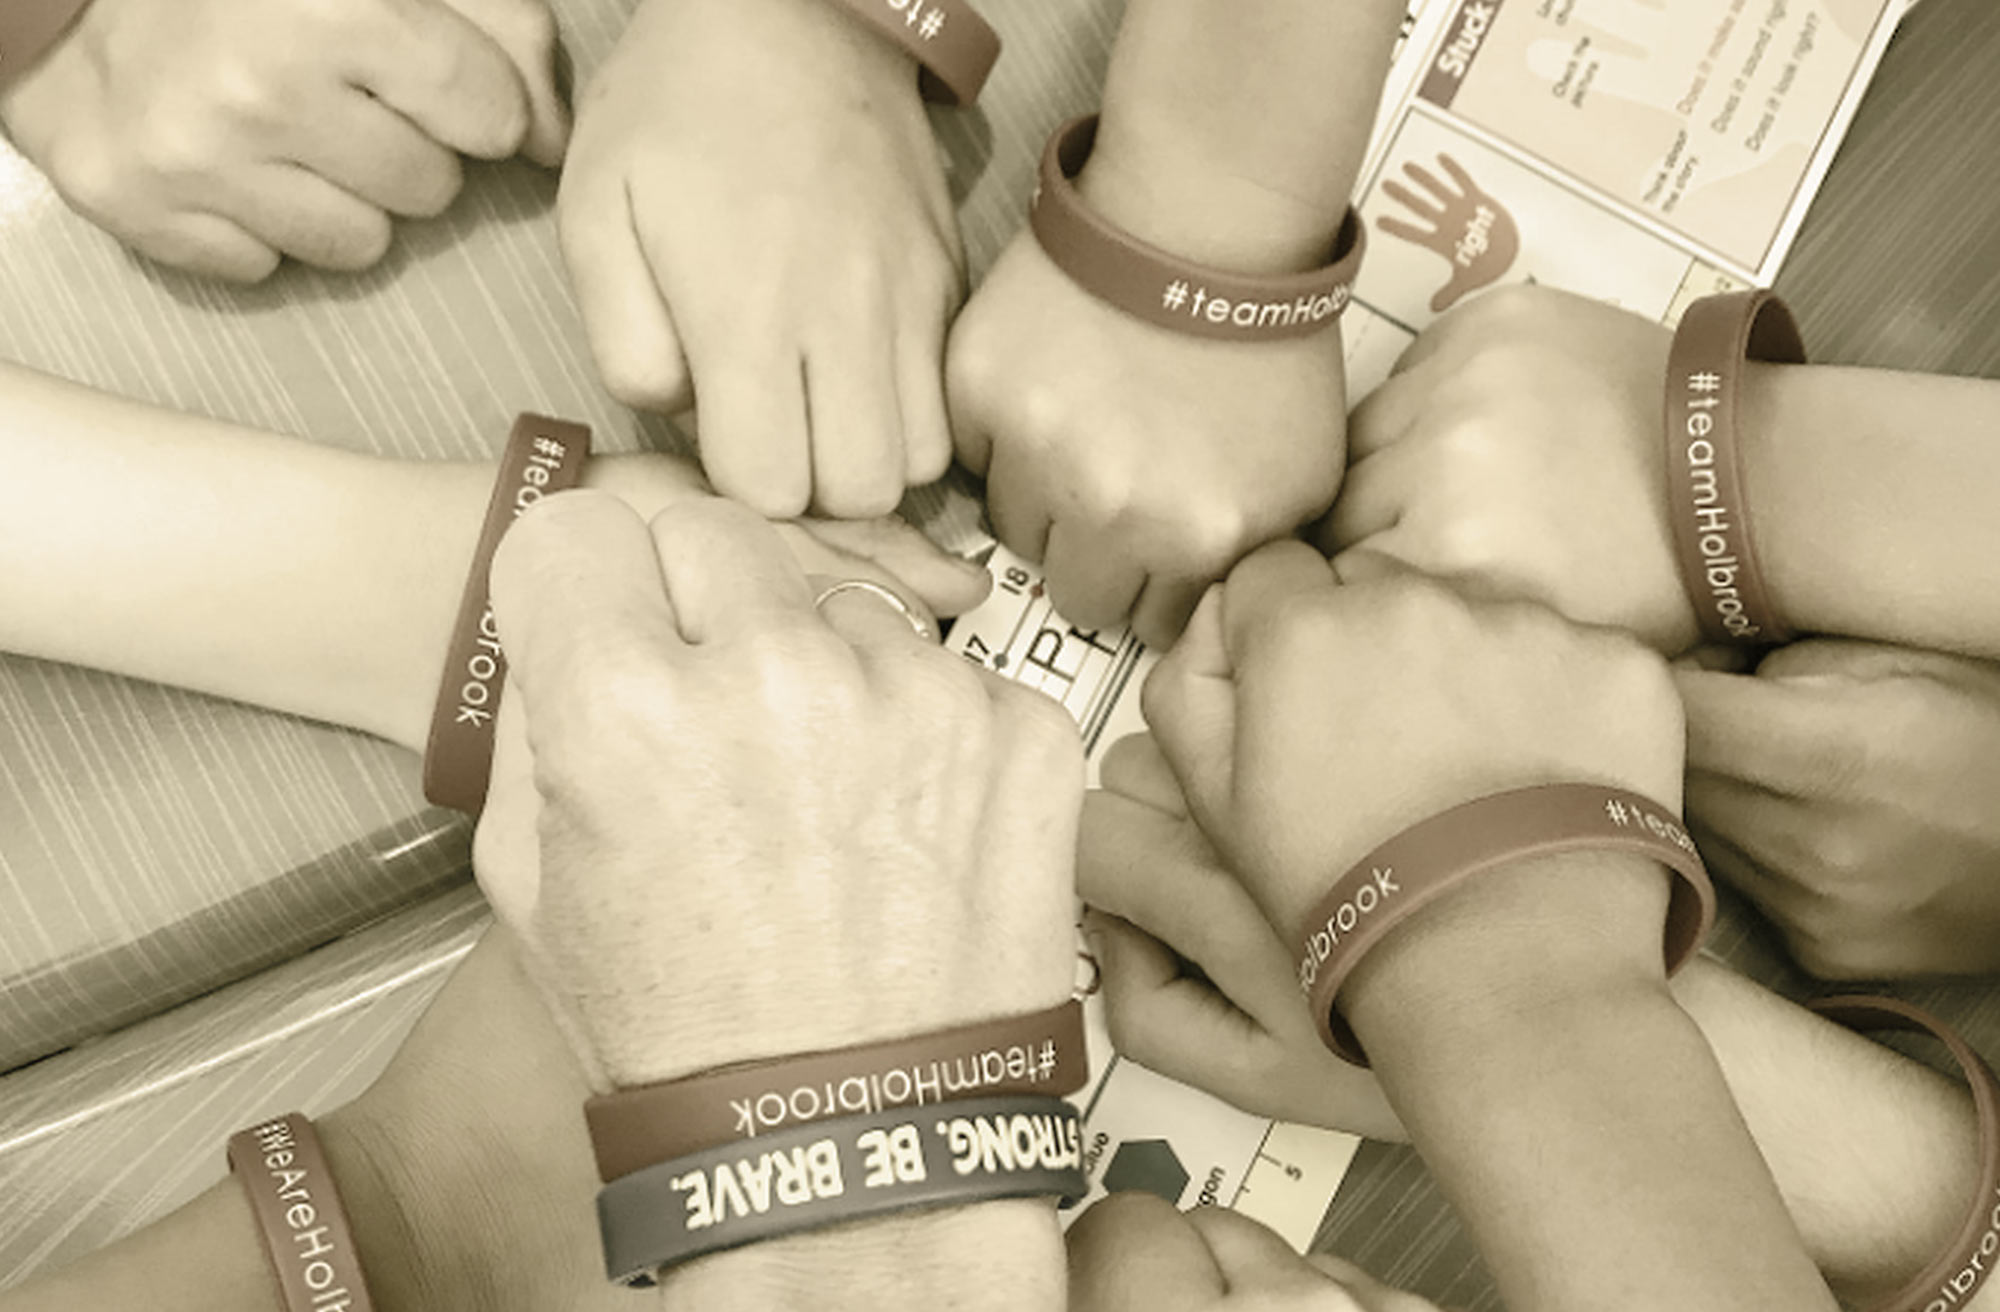 a huddle of students hands including an adult, all wearing #teamHolbrook bracelet